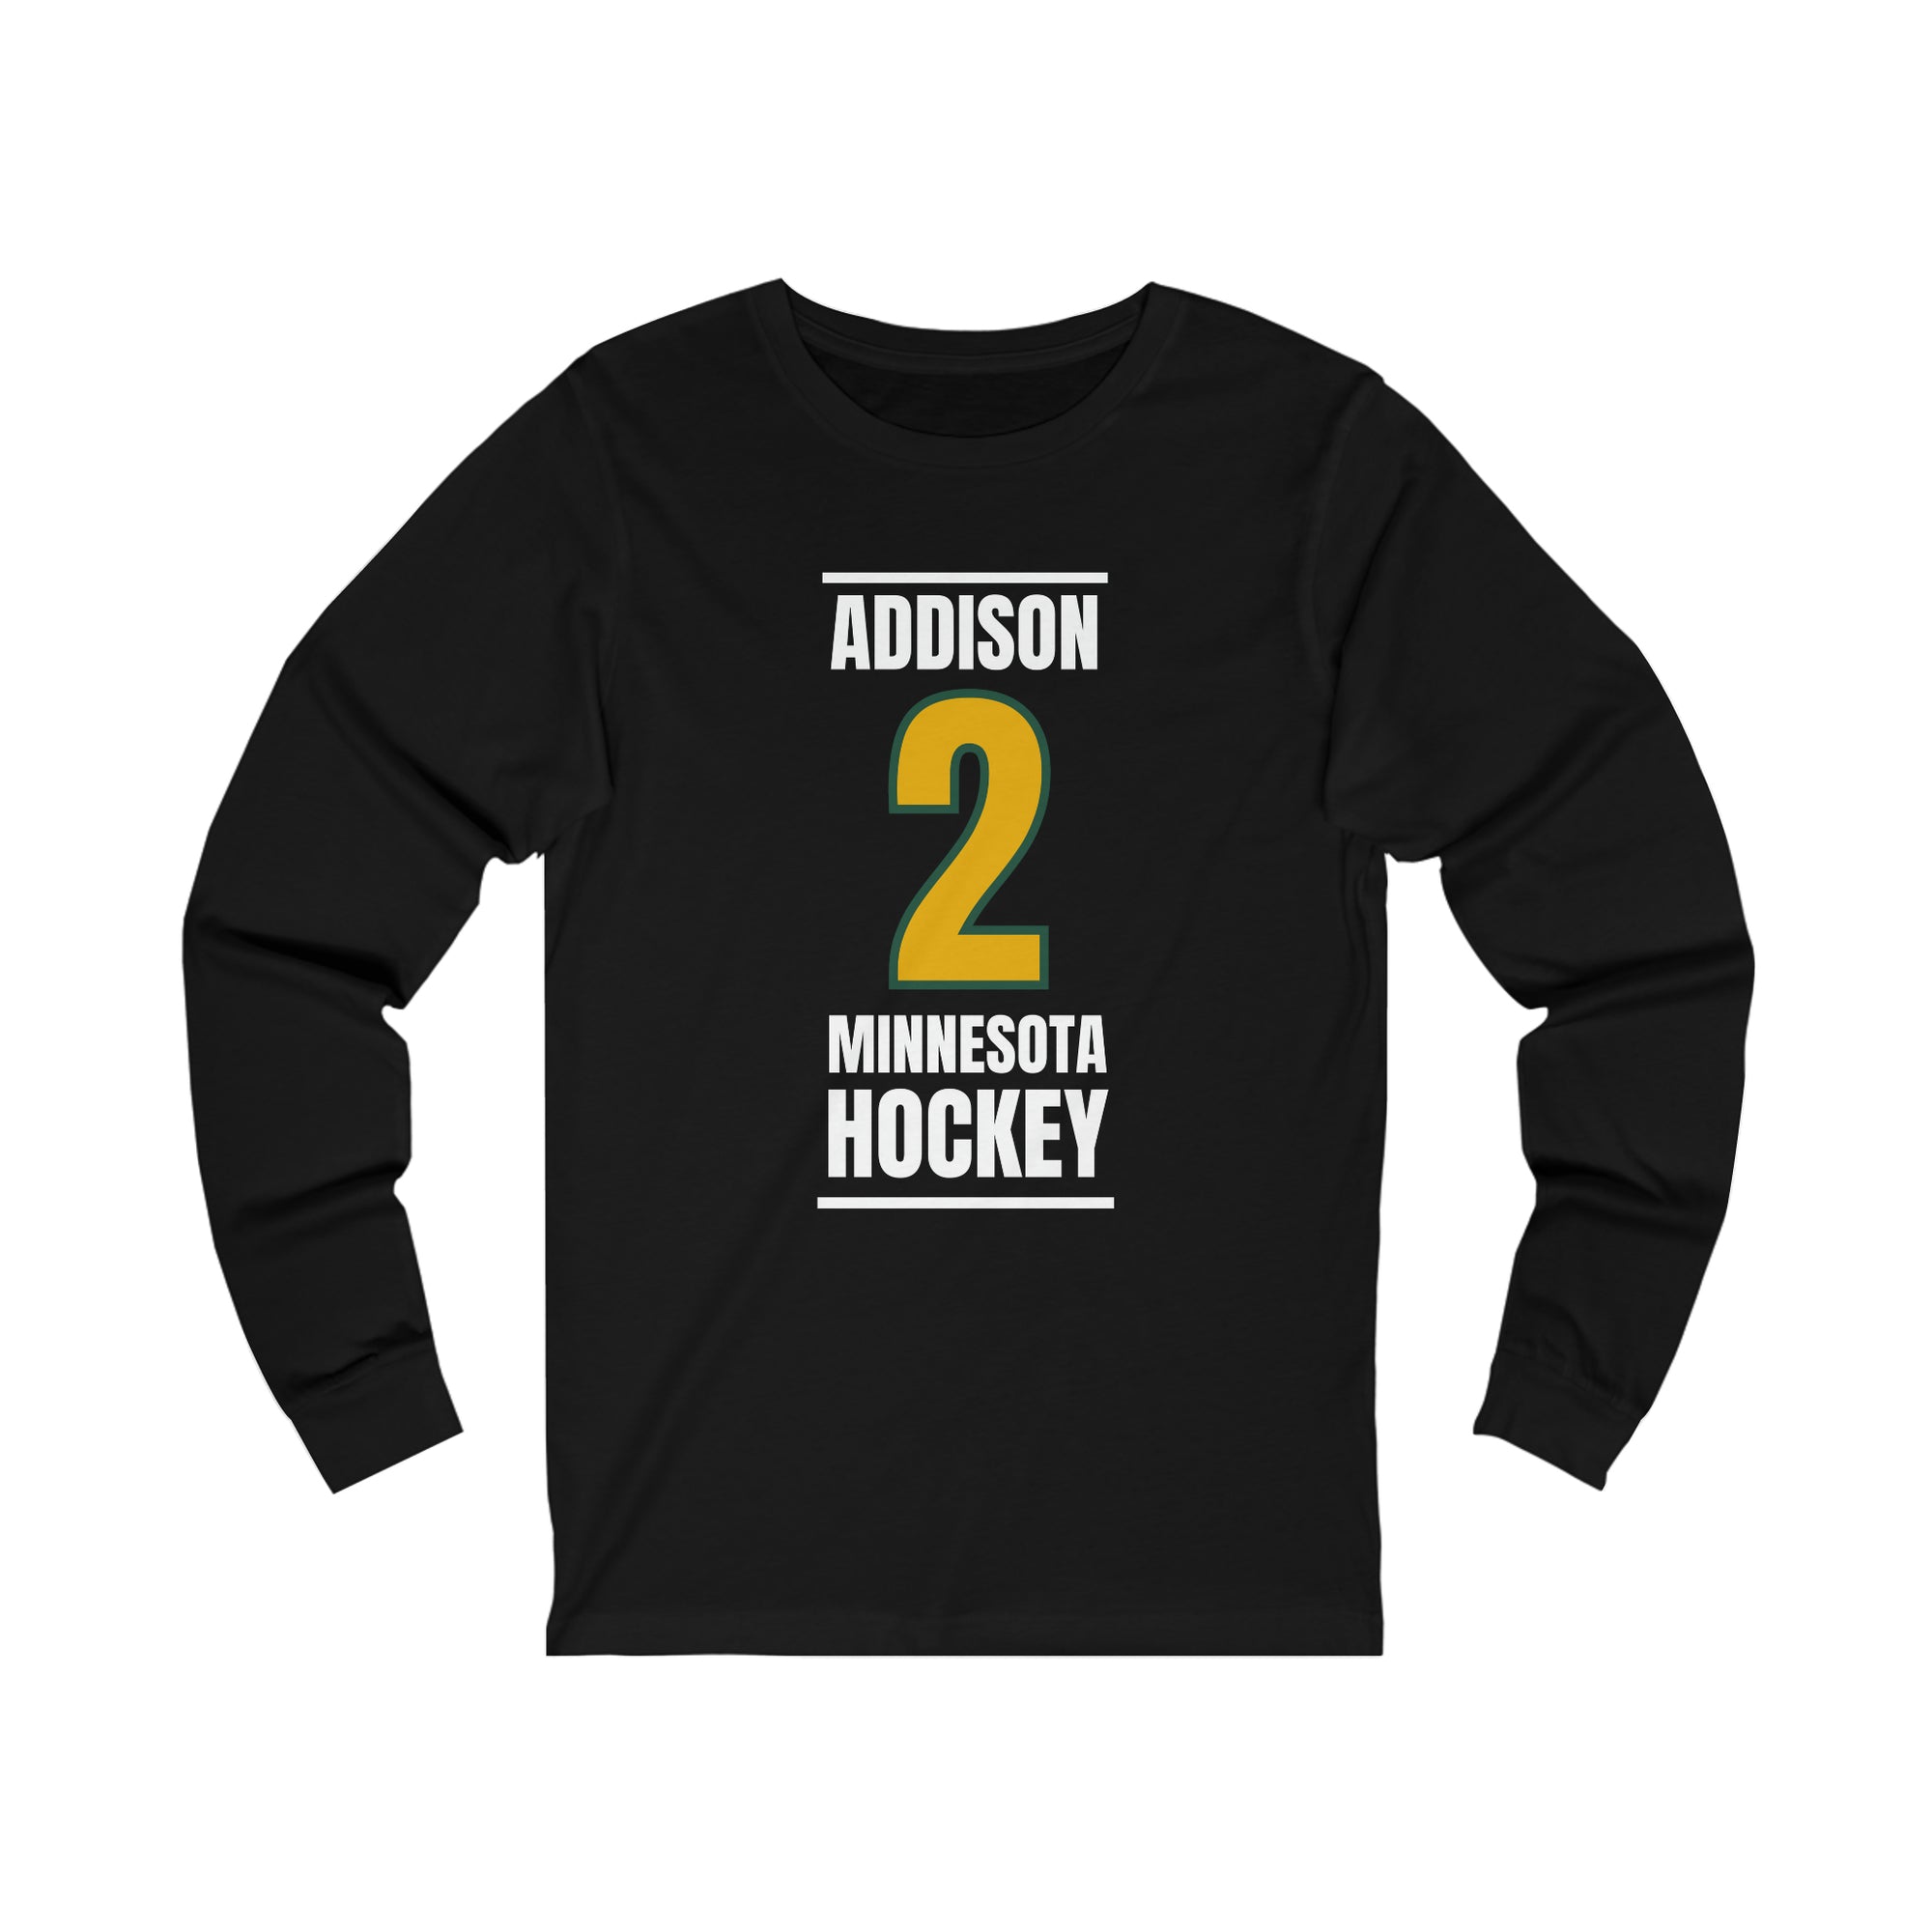 Addison 2 Minnesota Hockey Gold Vertical Design Unisex Jersey Long Sleeve Shirt